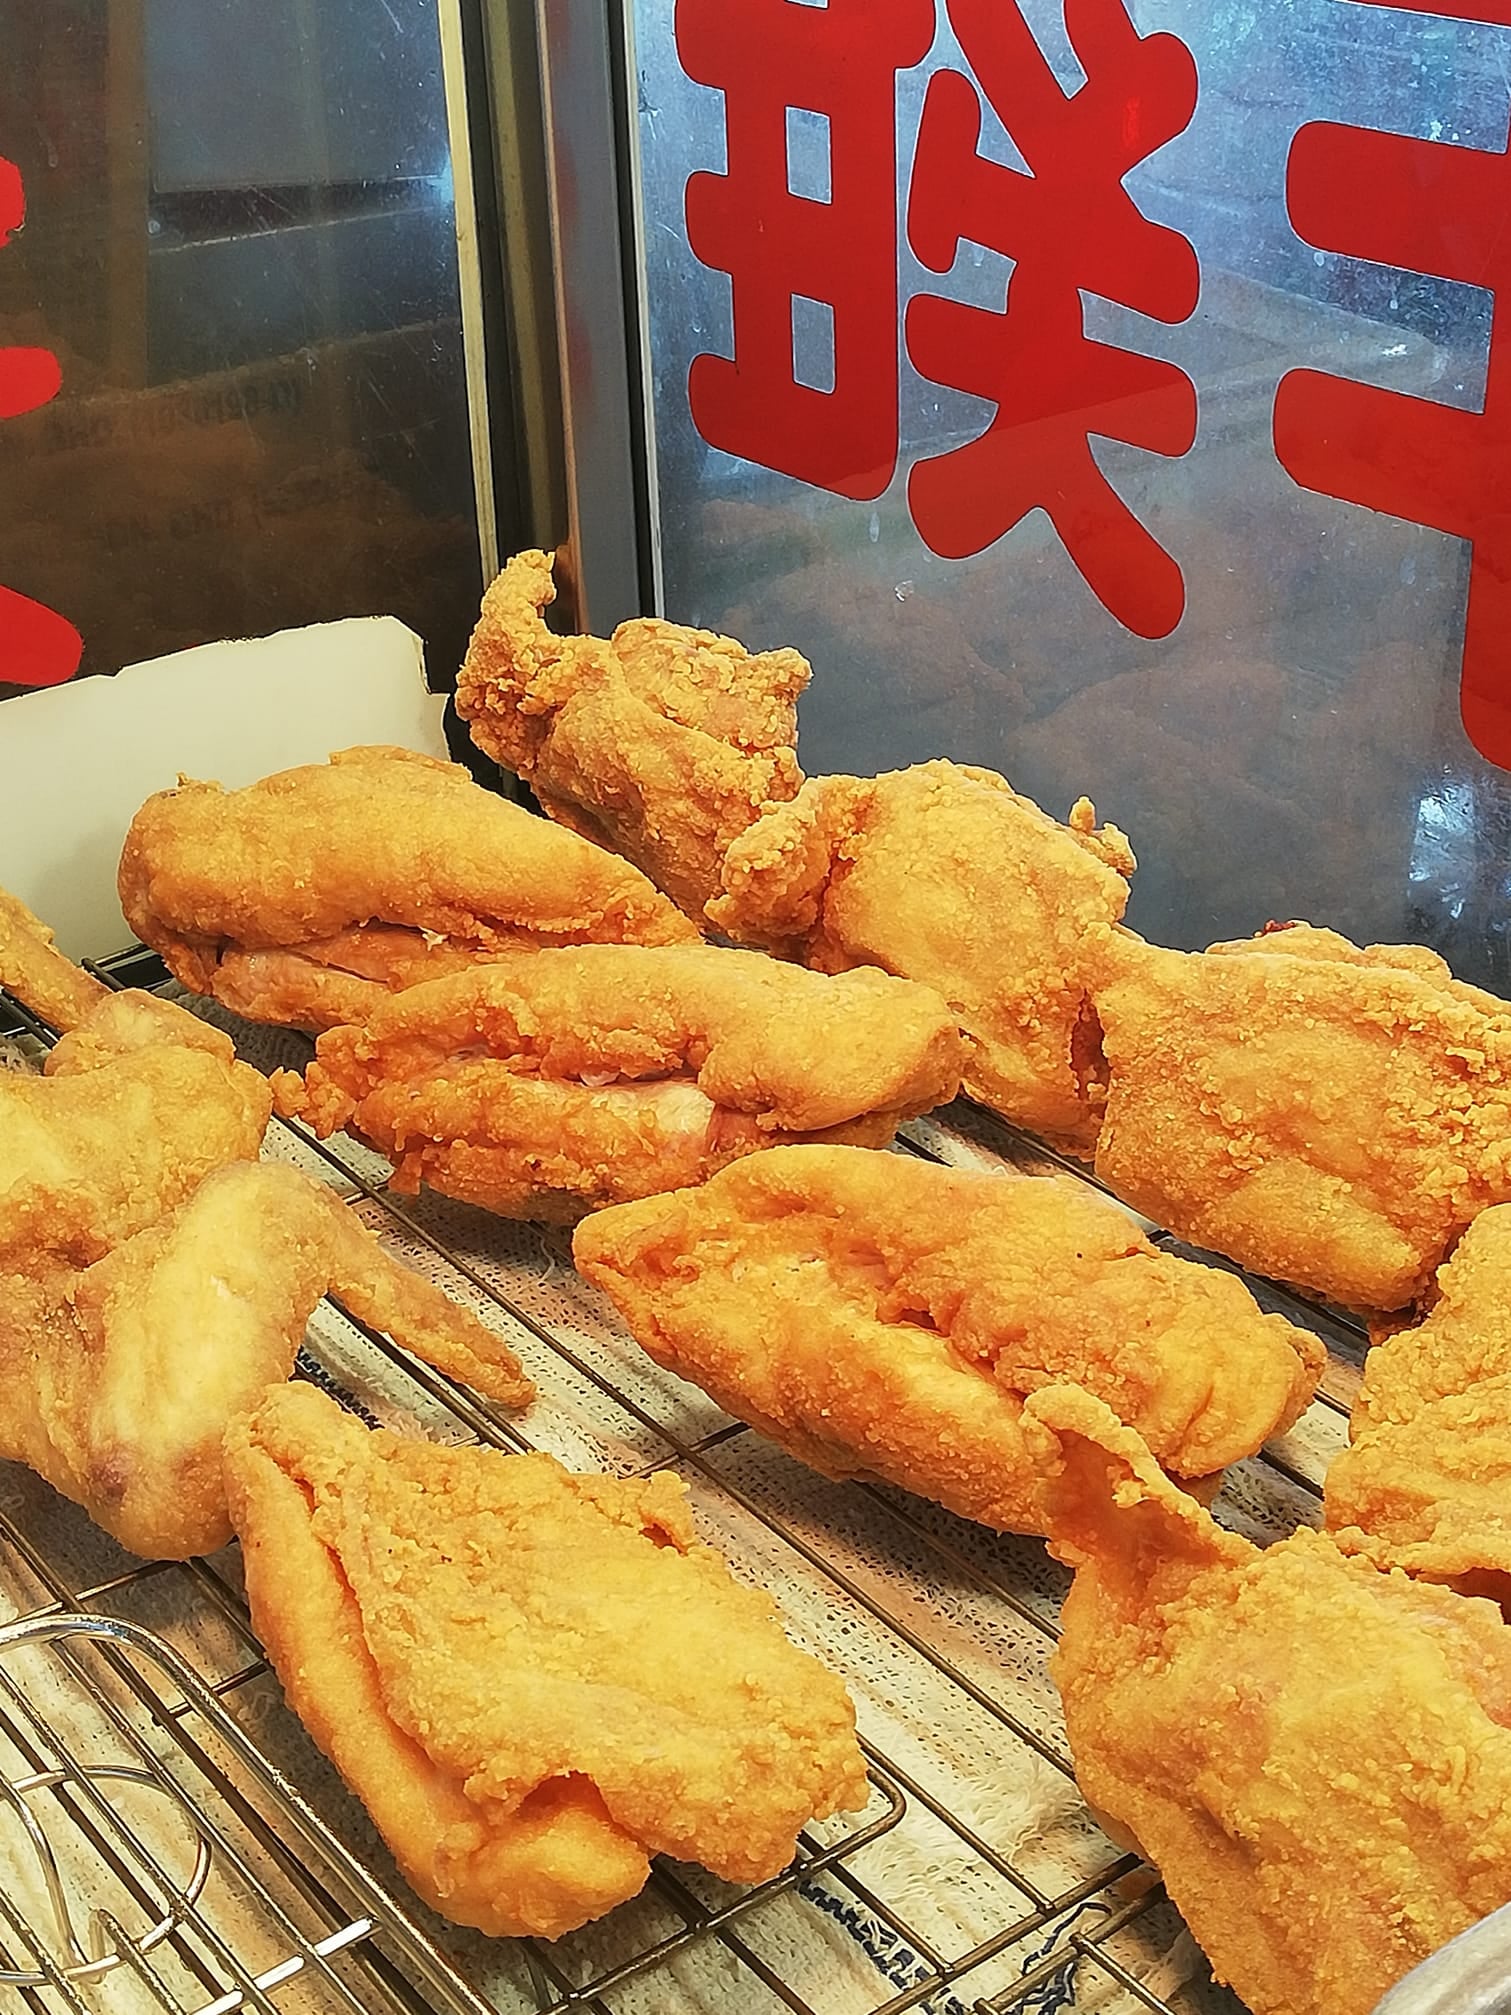 winner's fried chicken stall